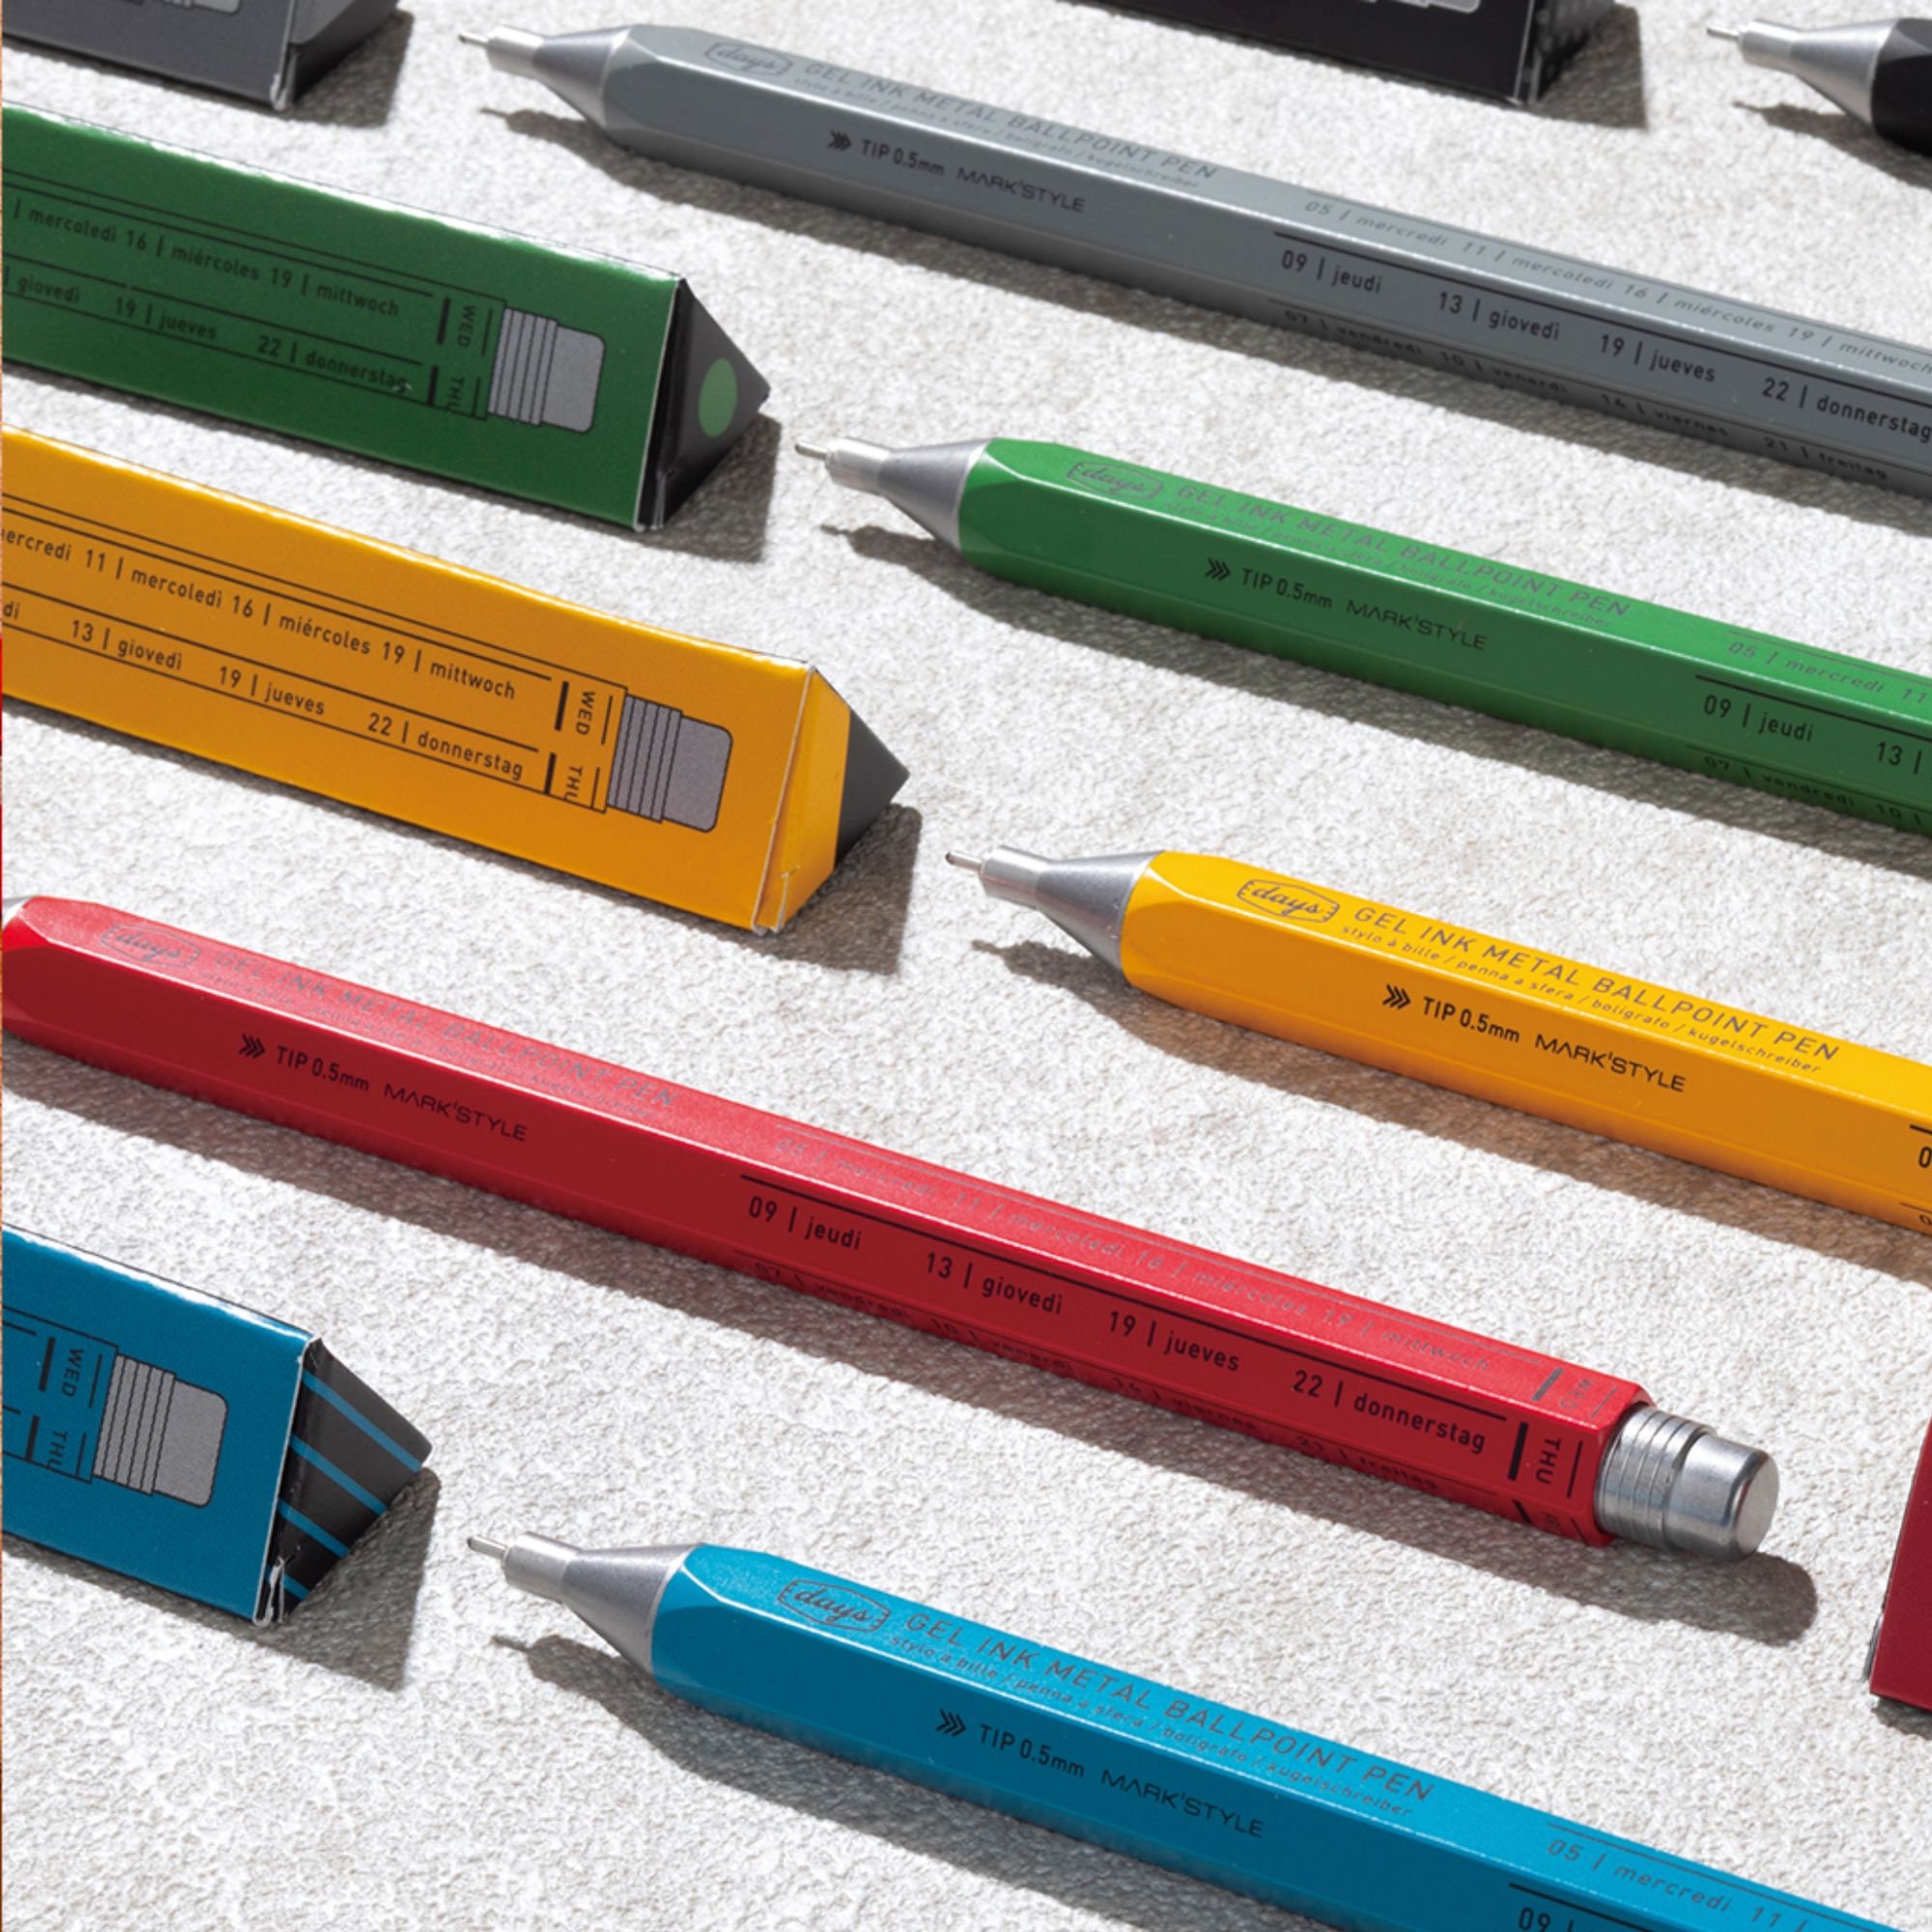 TUL Fine Writing Retractable Gel Pen with 2 Refills, Solid Metal Barrel, Medium Point, 0.7 mm, Gunmetal Barrel, Black & Blue Inks